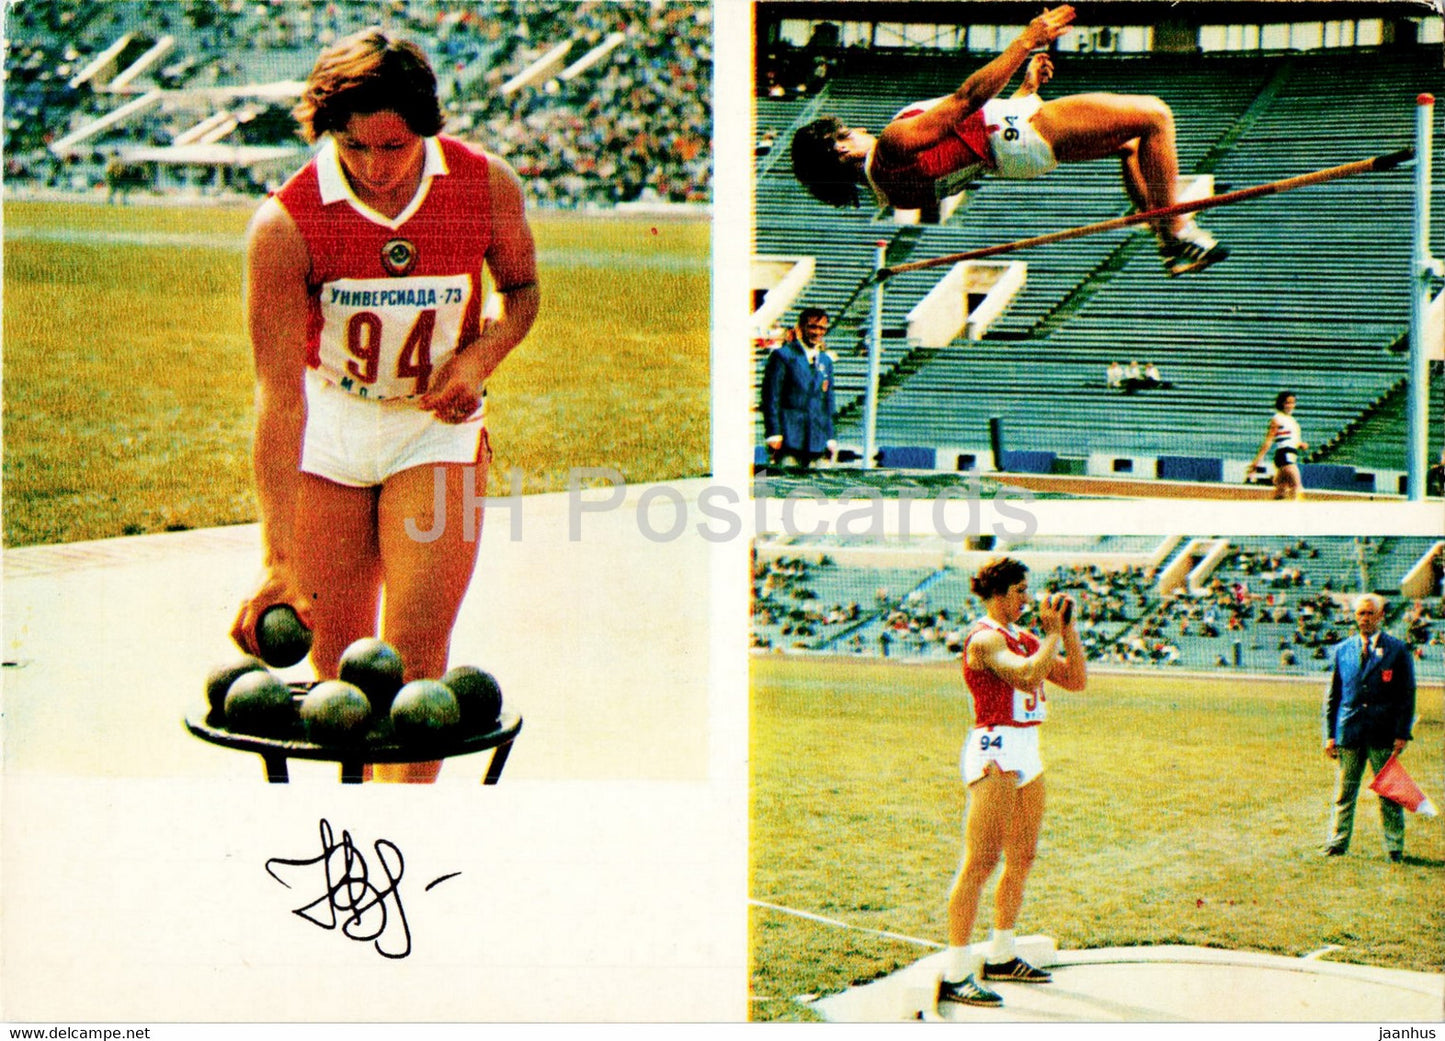 Nadezhda Tkachenko - pentathlon - shot put - athletics - Soviet champions - sports - 1974 - Russia USSR - unused - JH Postcards